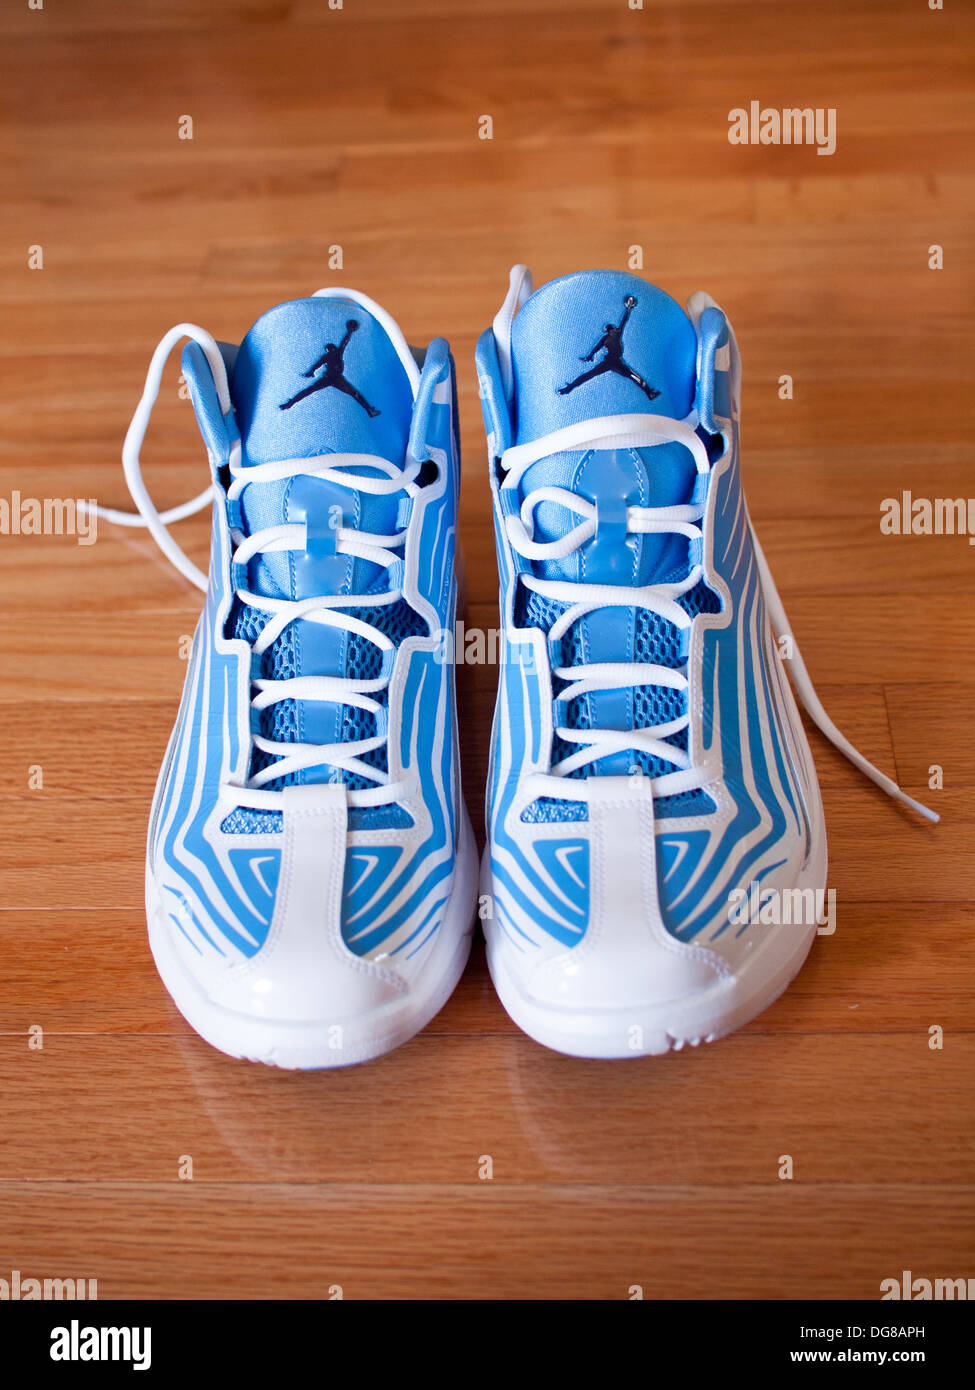 A paar Universität blau, Midnight Navy und weiß Jordan Aero Mania Herren  Basketball-Schuhe Stockfotografie - Alamy